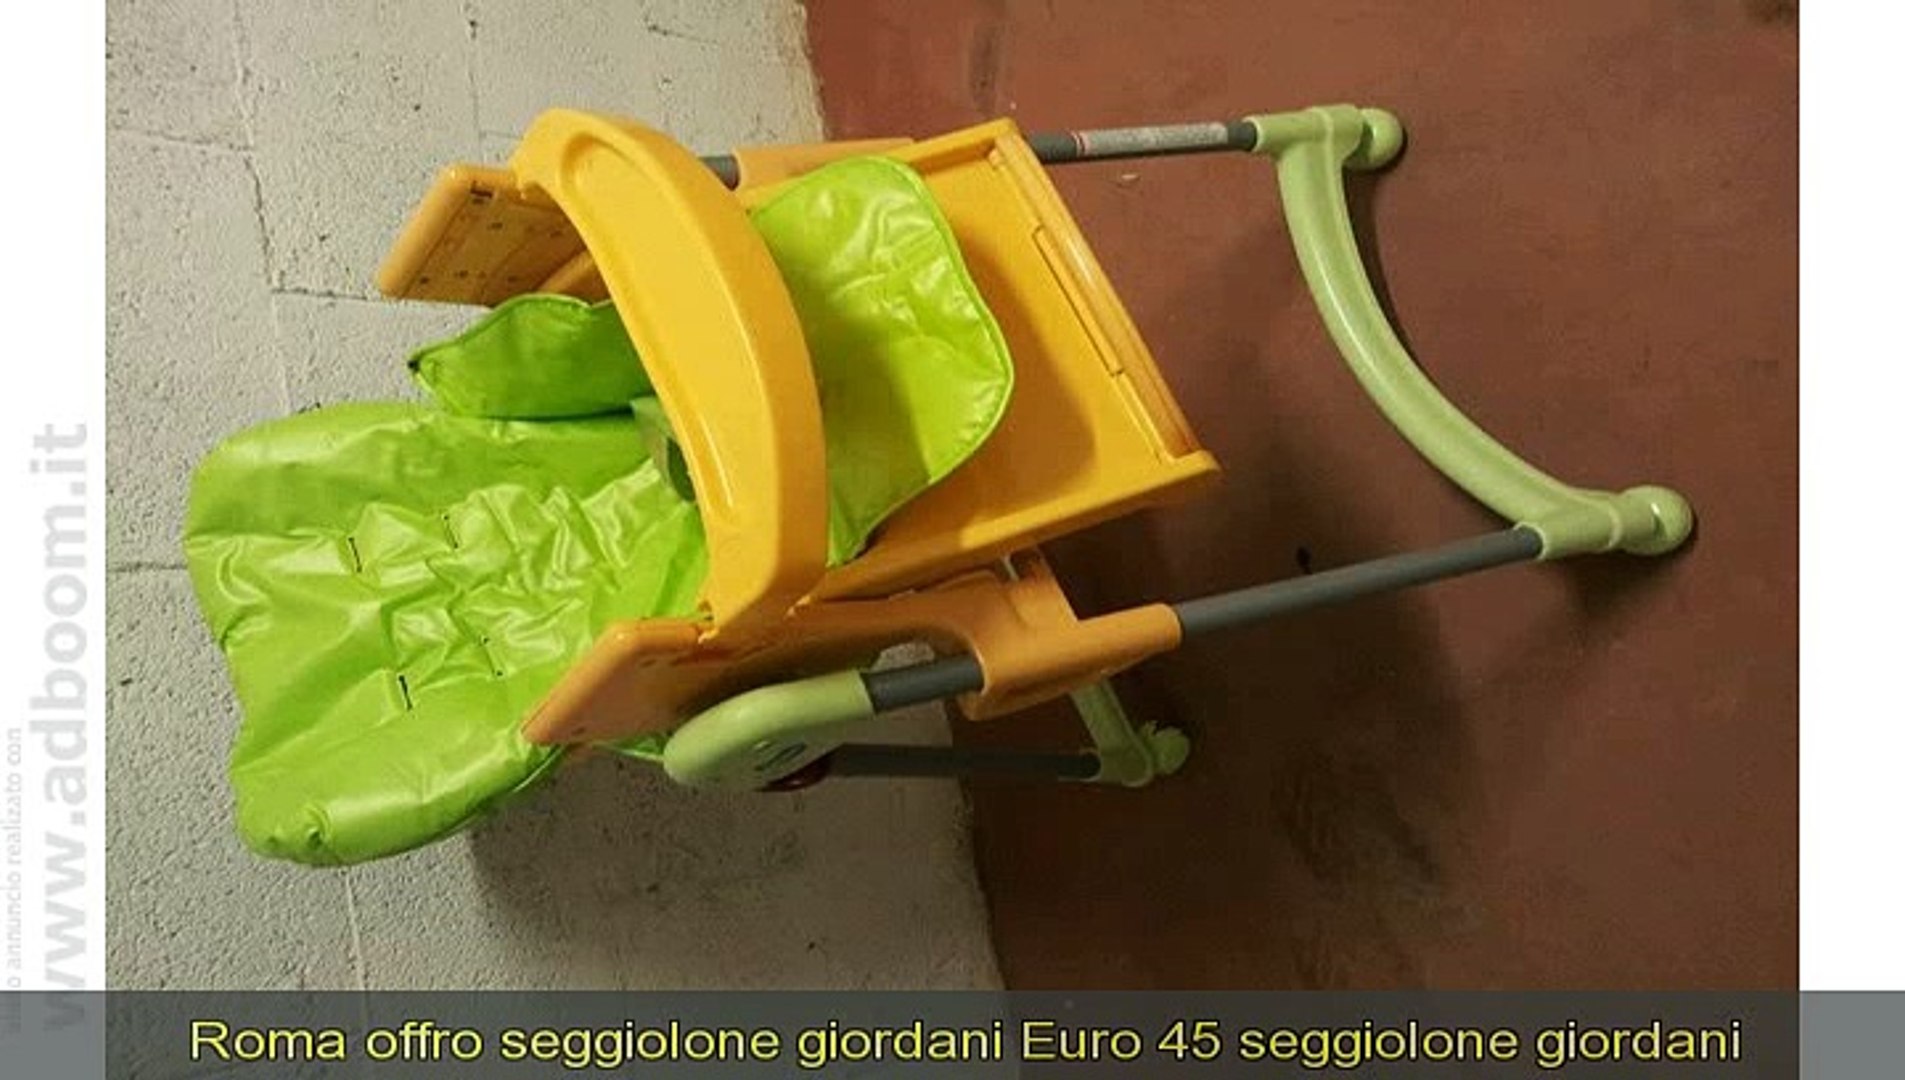 ROMA, SEGGIOLONE GIORDANI EURO 45 - Video Dailymotion